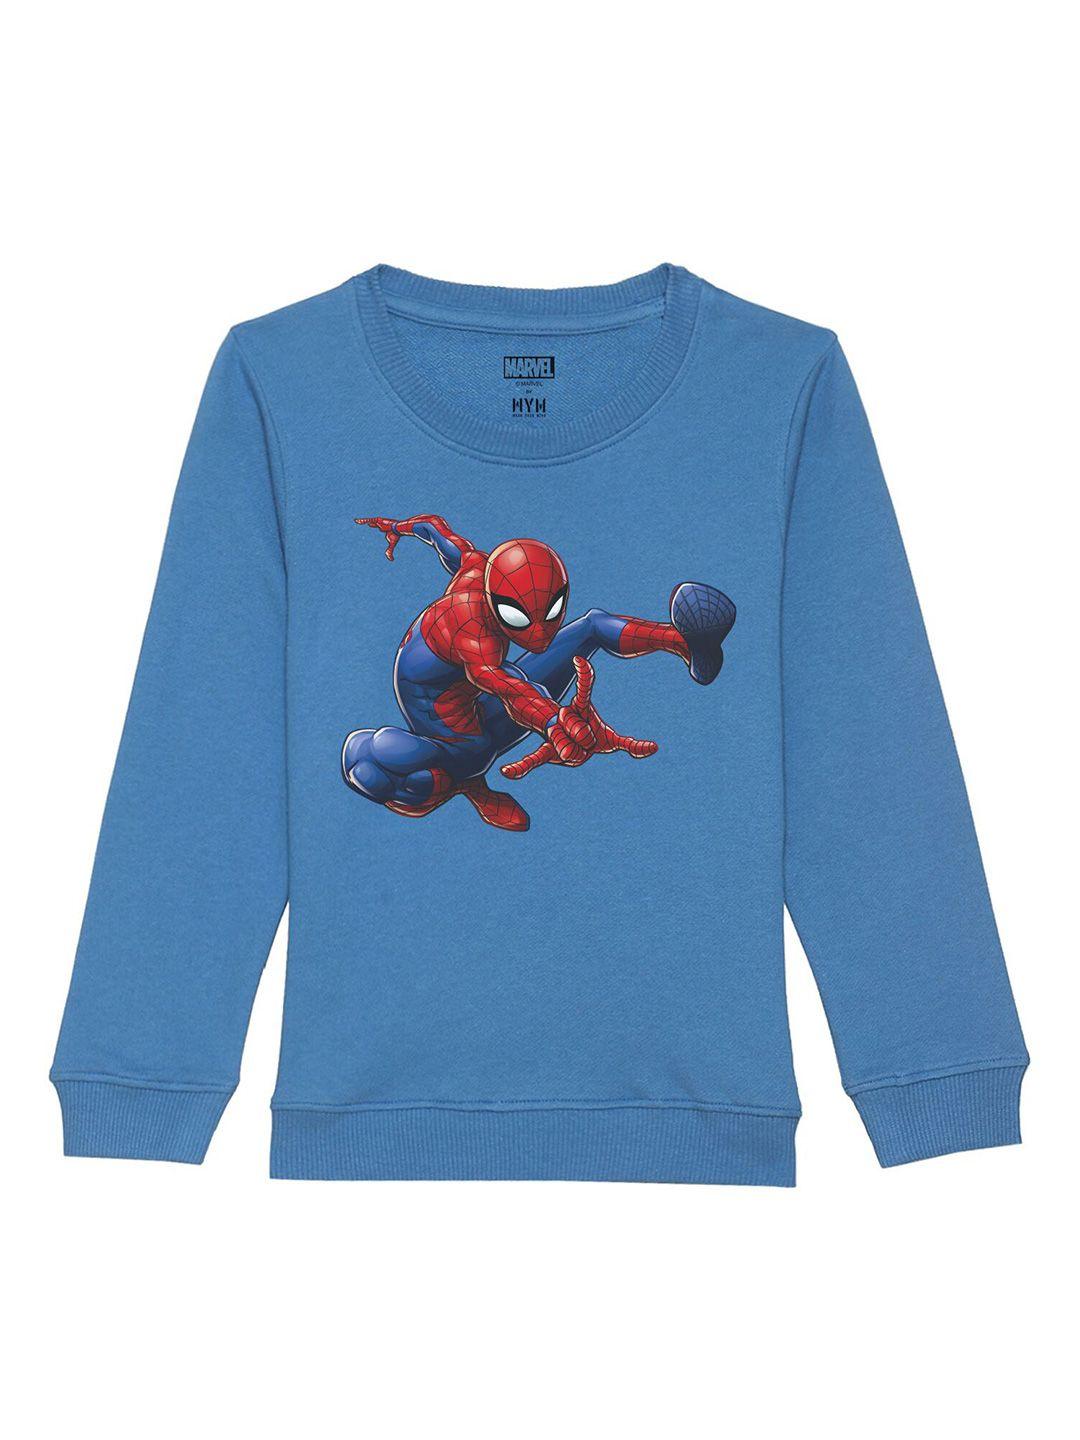 marvel by wear your mind kids blue printed sweatshirt